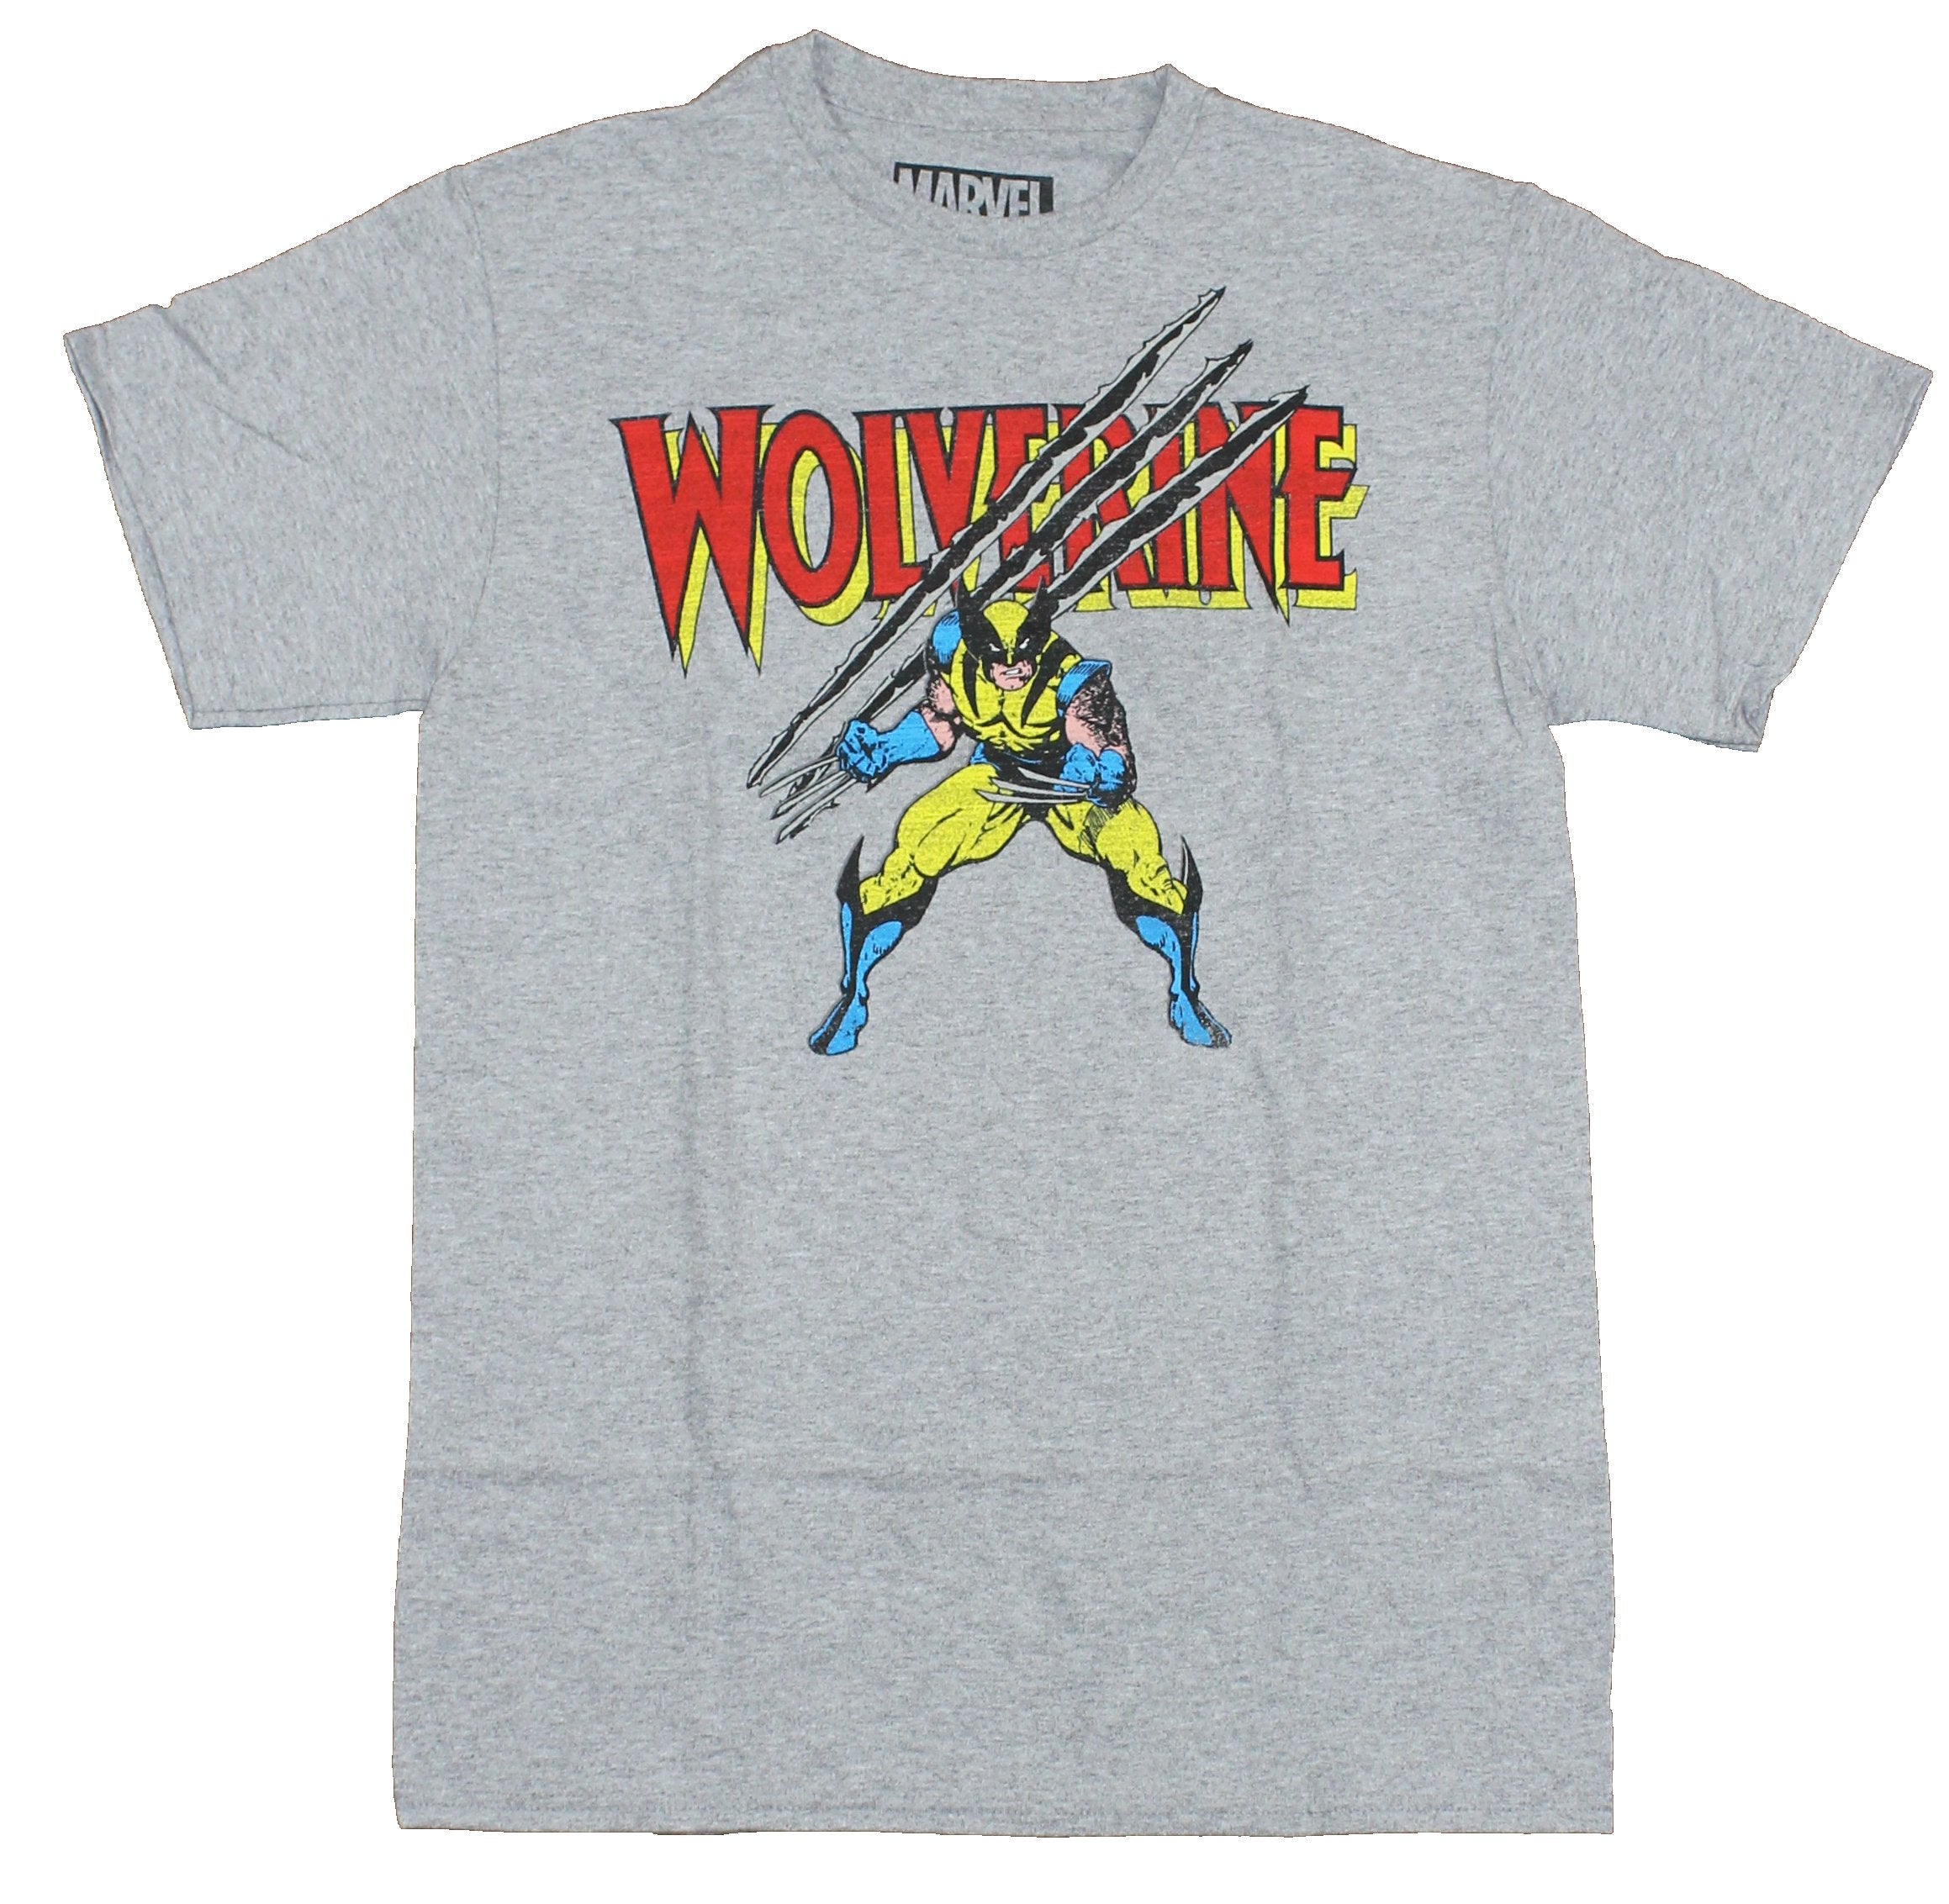 Wolverine Marvel Mens T-Shirt - Slashing Stance Under Red Name Image